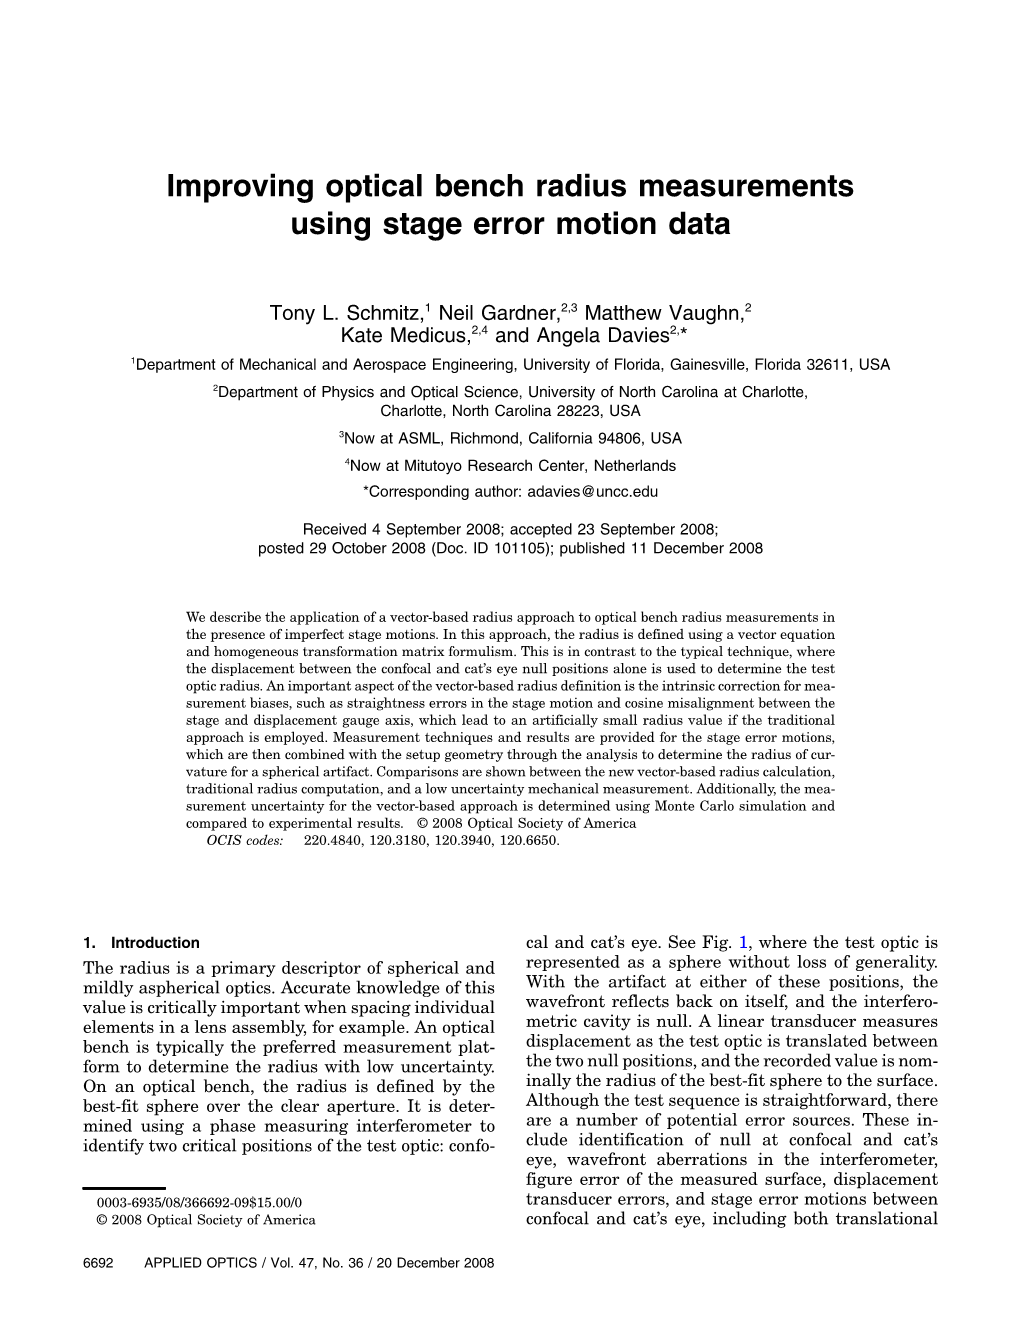 Improving Optical Bench Radius Measurements Using Stage Error Motion Data